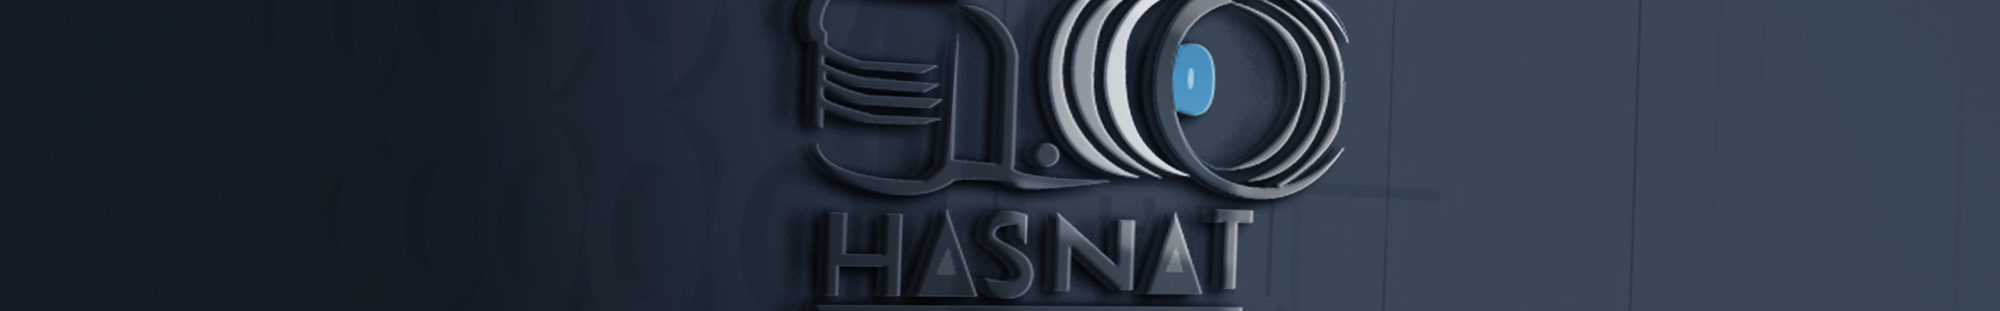 Hasnaat Ahmad's profile banner